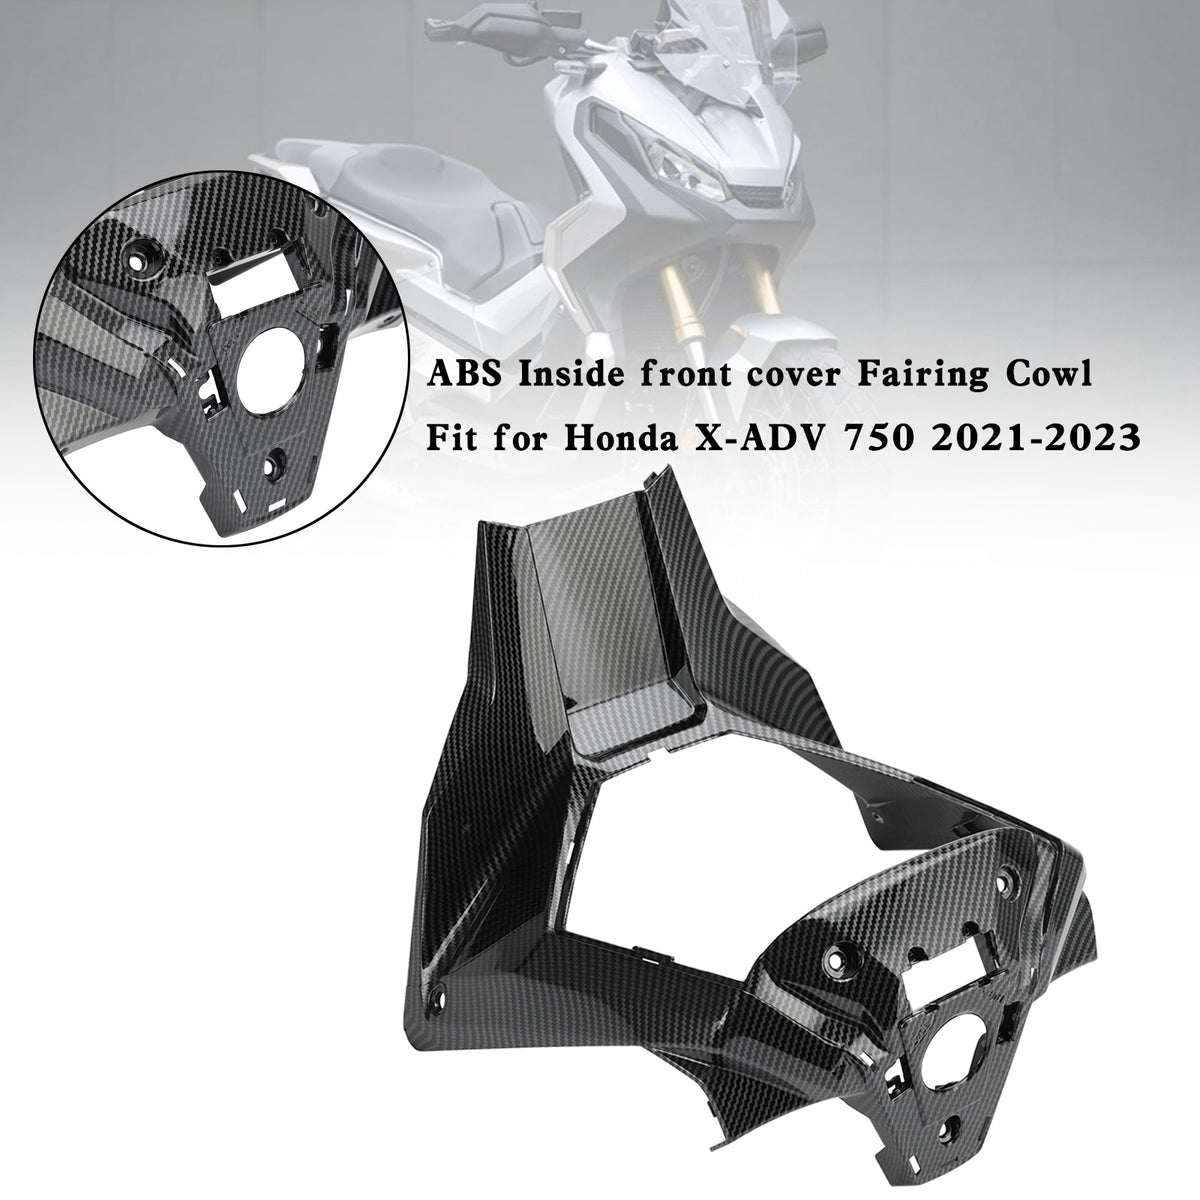 ABS Inside front cover Fairing Cowl for Honda X-ADV 750 XADV 2021-2023